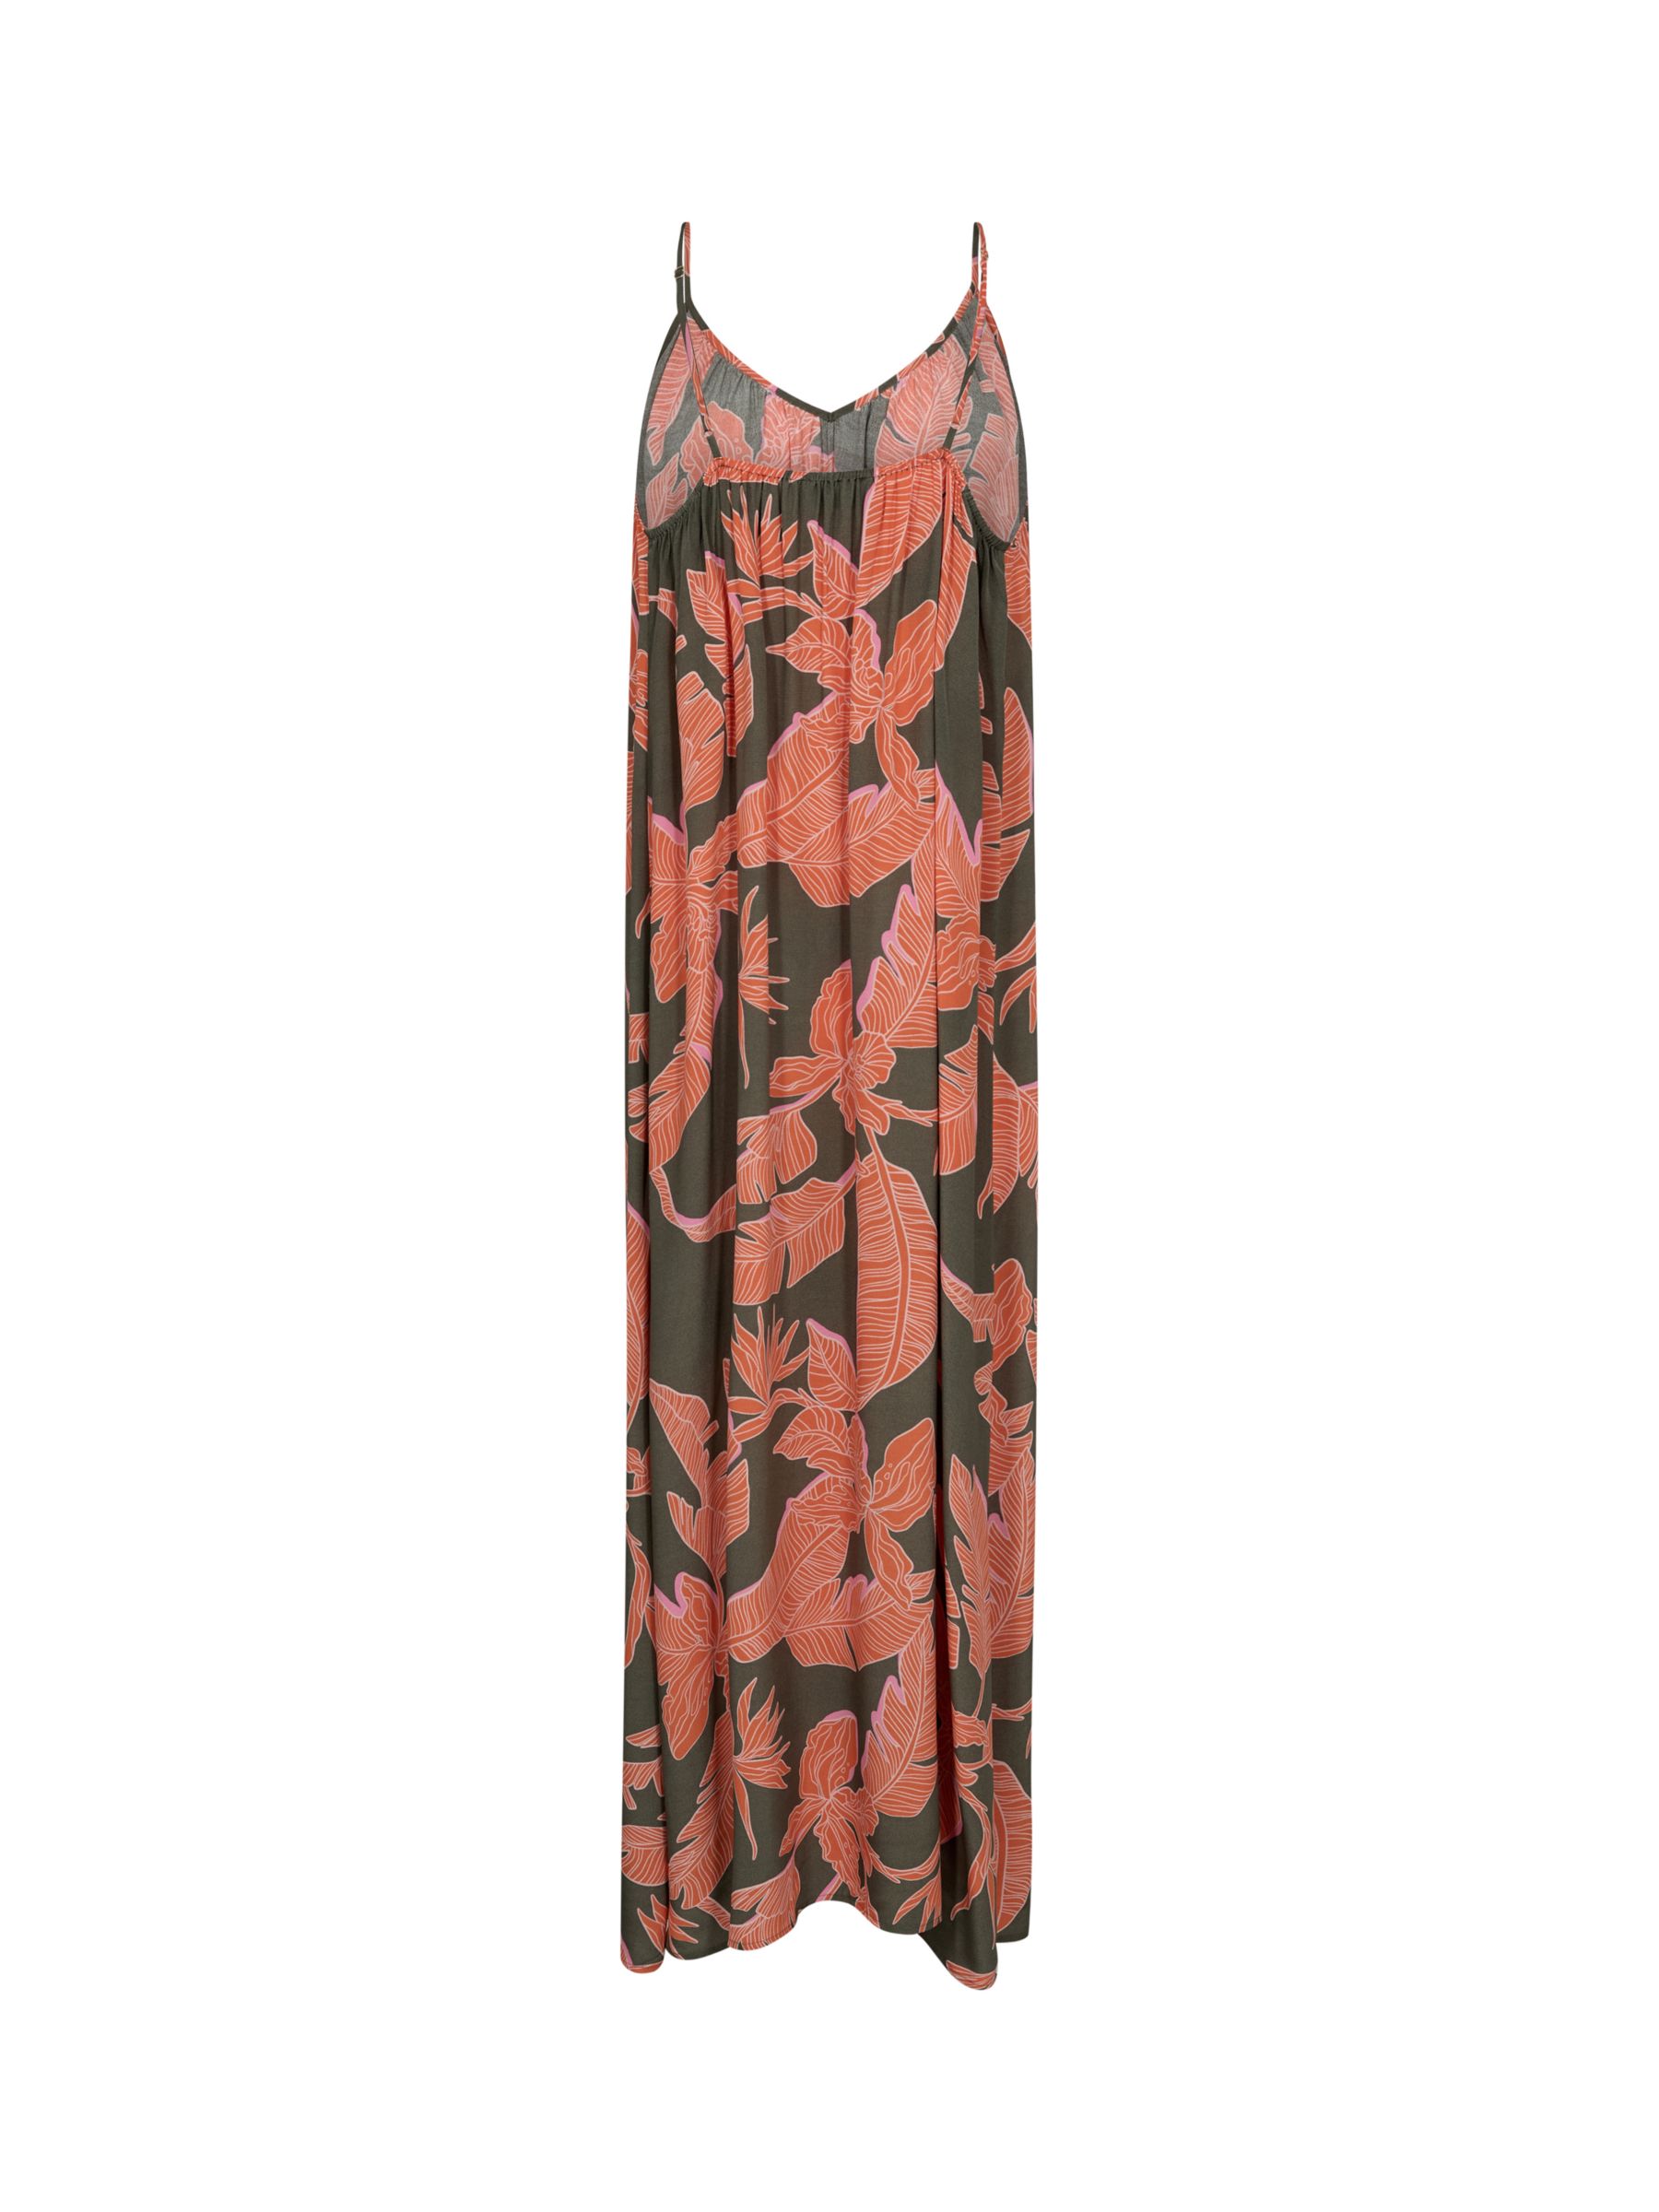 MOS MOSH Alohi Grace Leaf Print Maxi Dress, Dusty Olive/Multi, XS